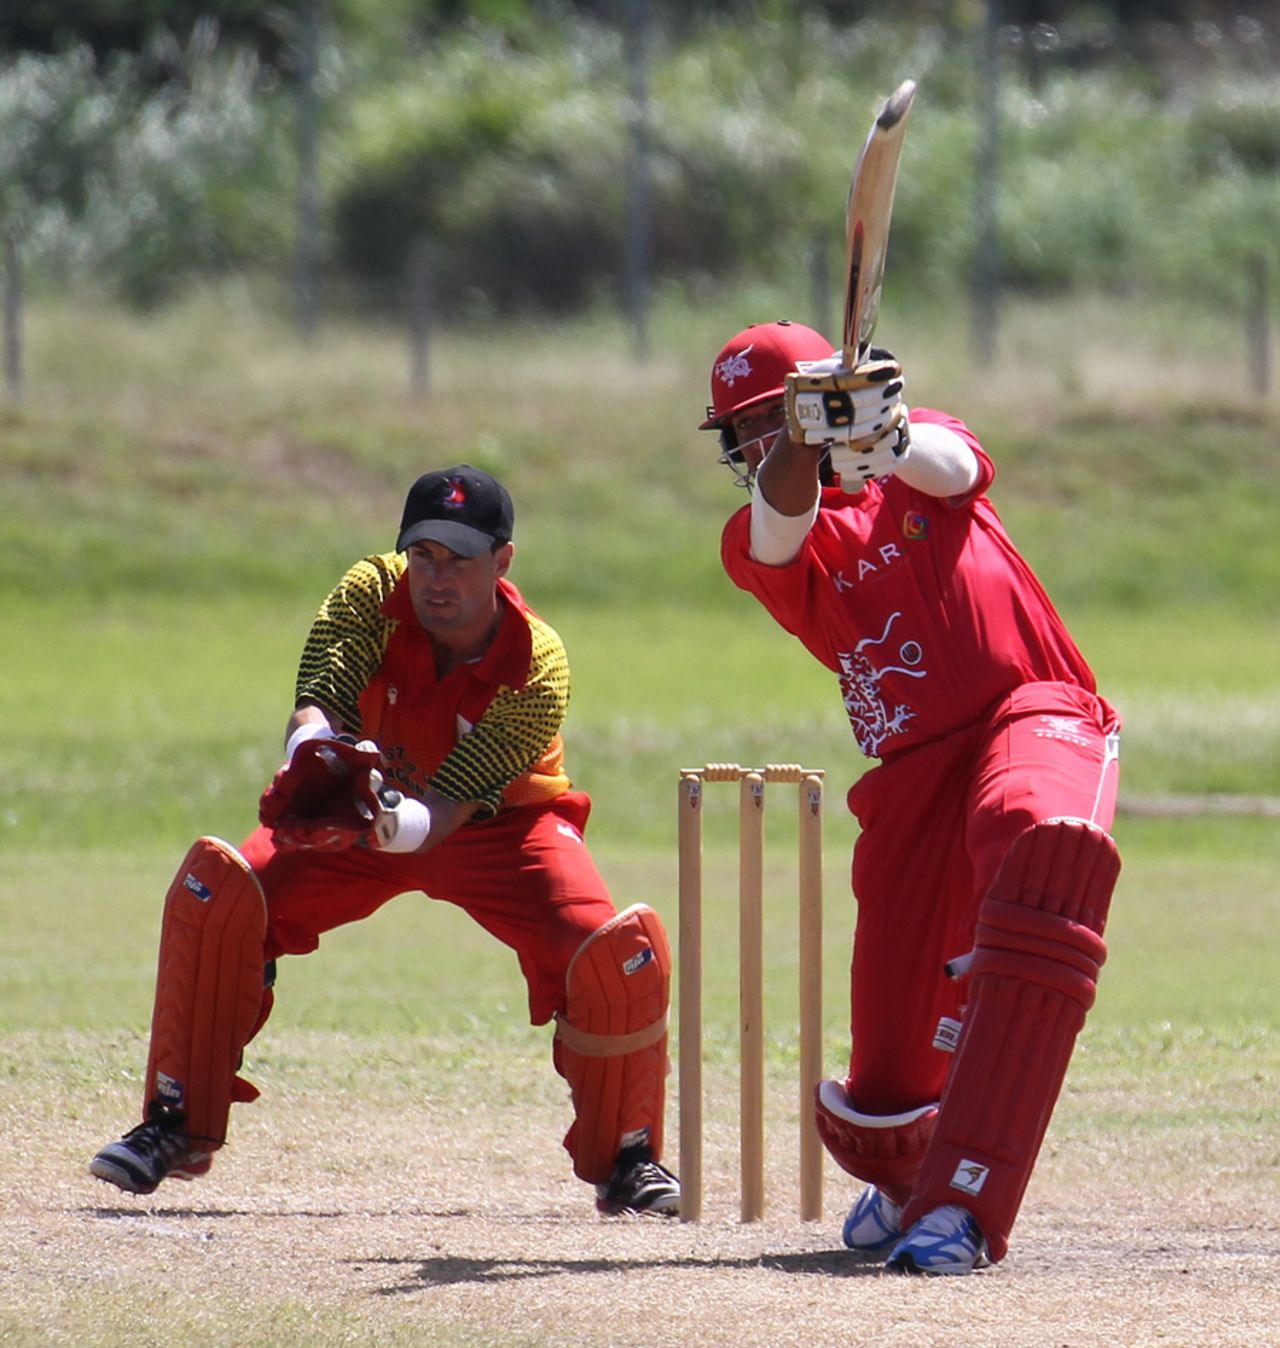 Babar Hayat batting against Brisbane/Gold Coast at the AIr Niugini Super Series 2012 in Port Moresby